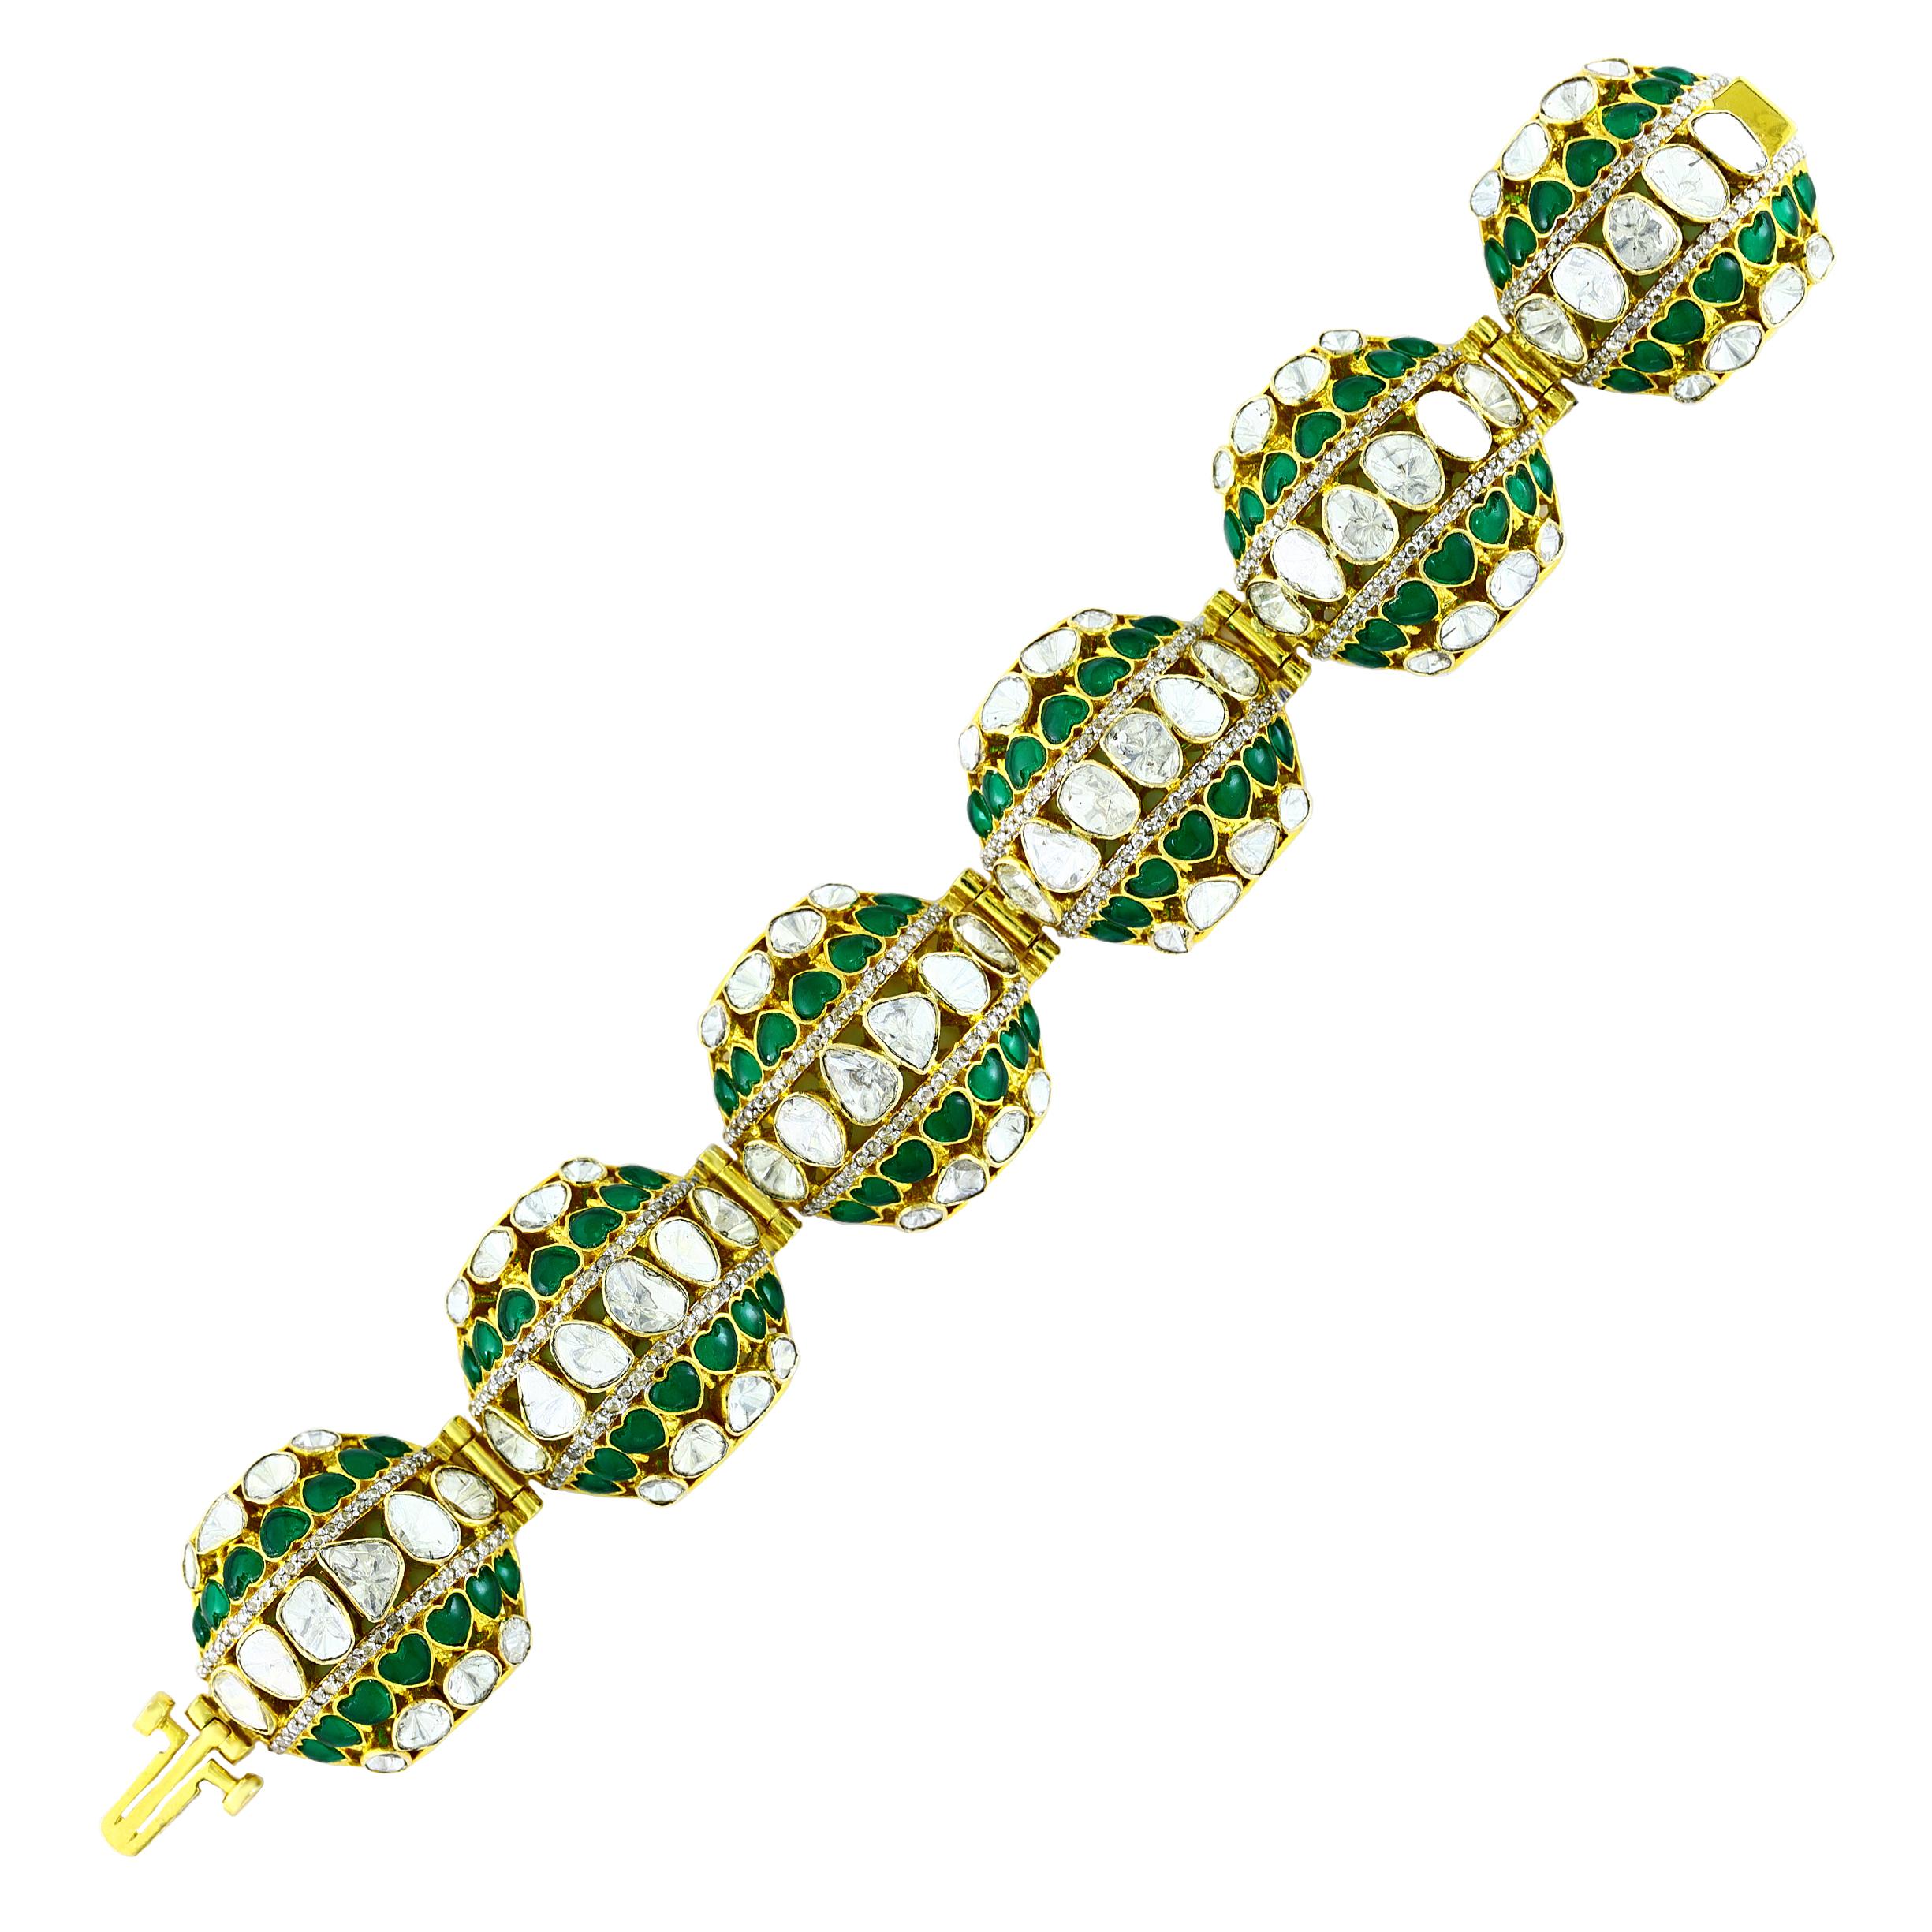 12 Carat Diamond Polki Bangle /Bracelet in 18 Karat Yellow Gold 58 Grams 1